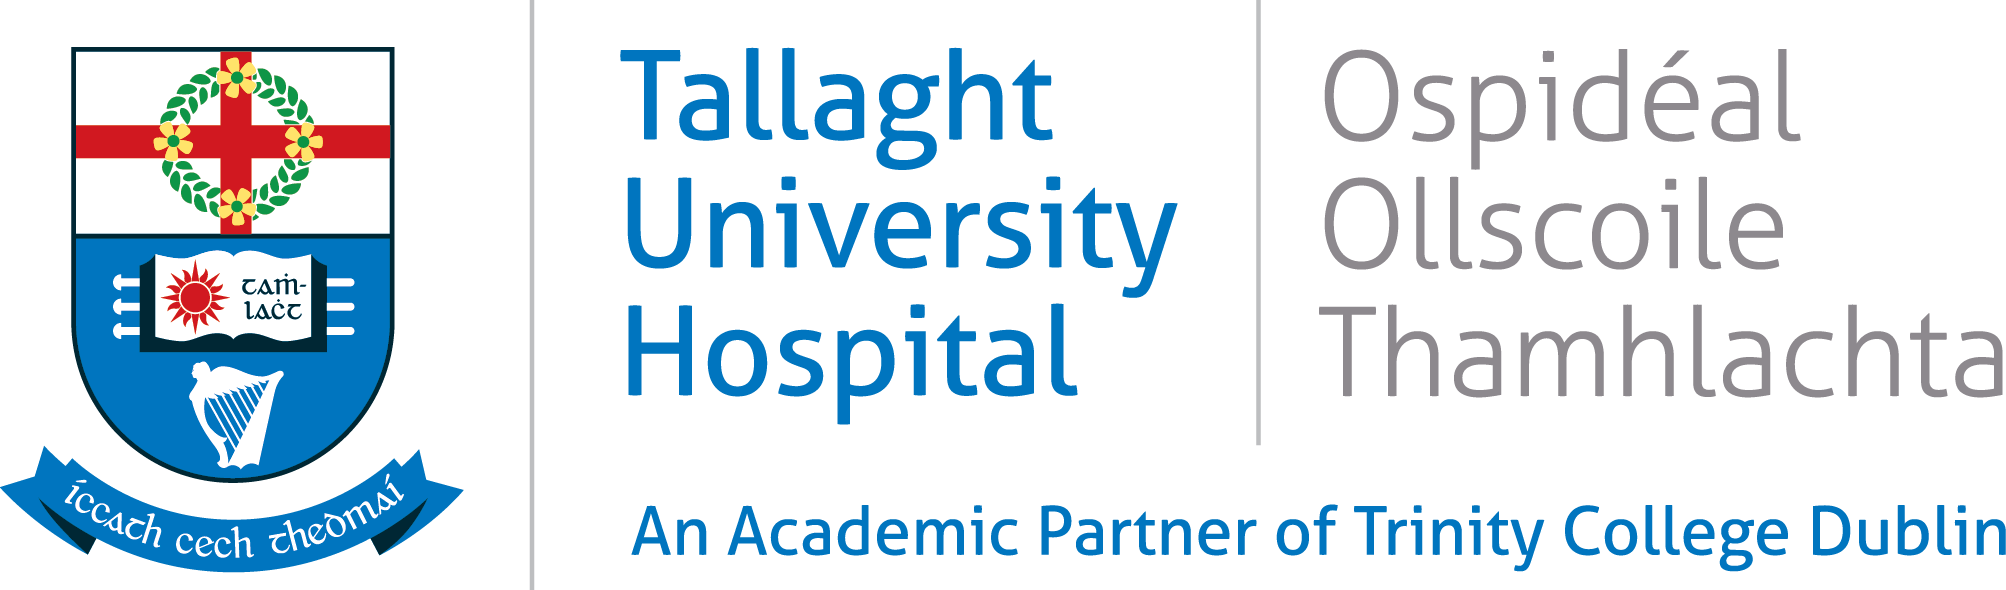 Tallaght University Hospital logo